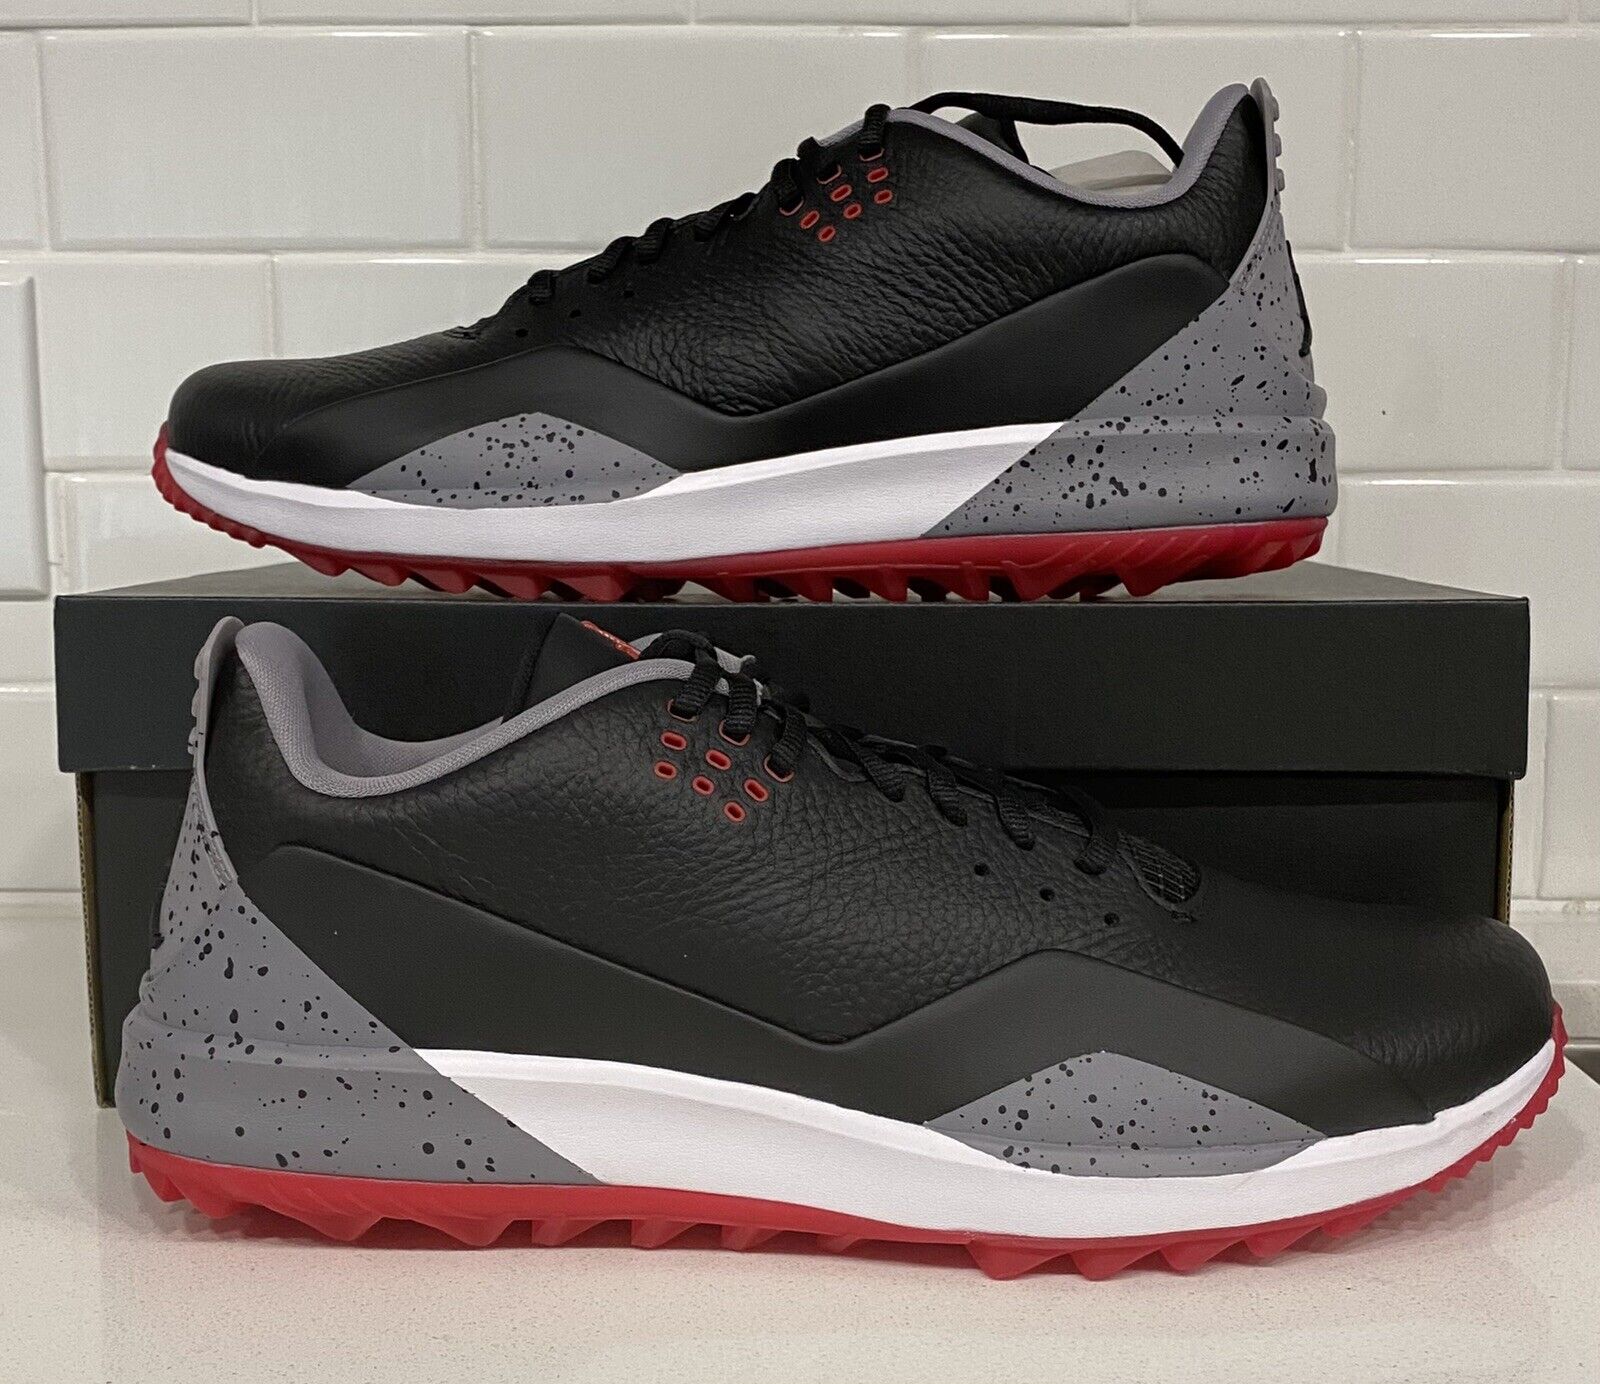 Jordan ADG 3 Golf Shoes Men's Size 11.5 CW7242 001 Black Cement Grey “Bred”